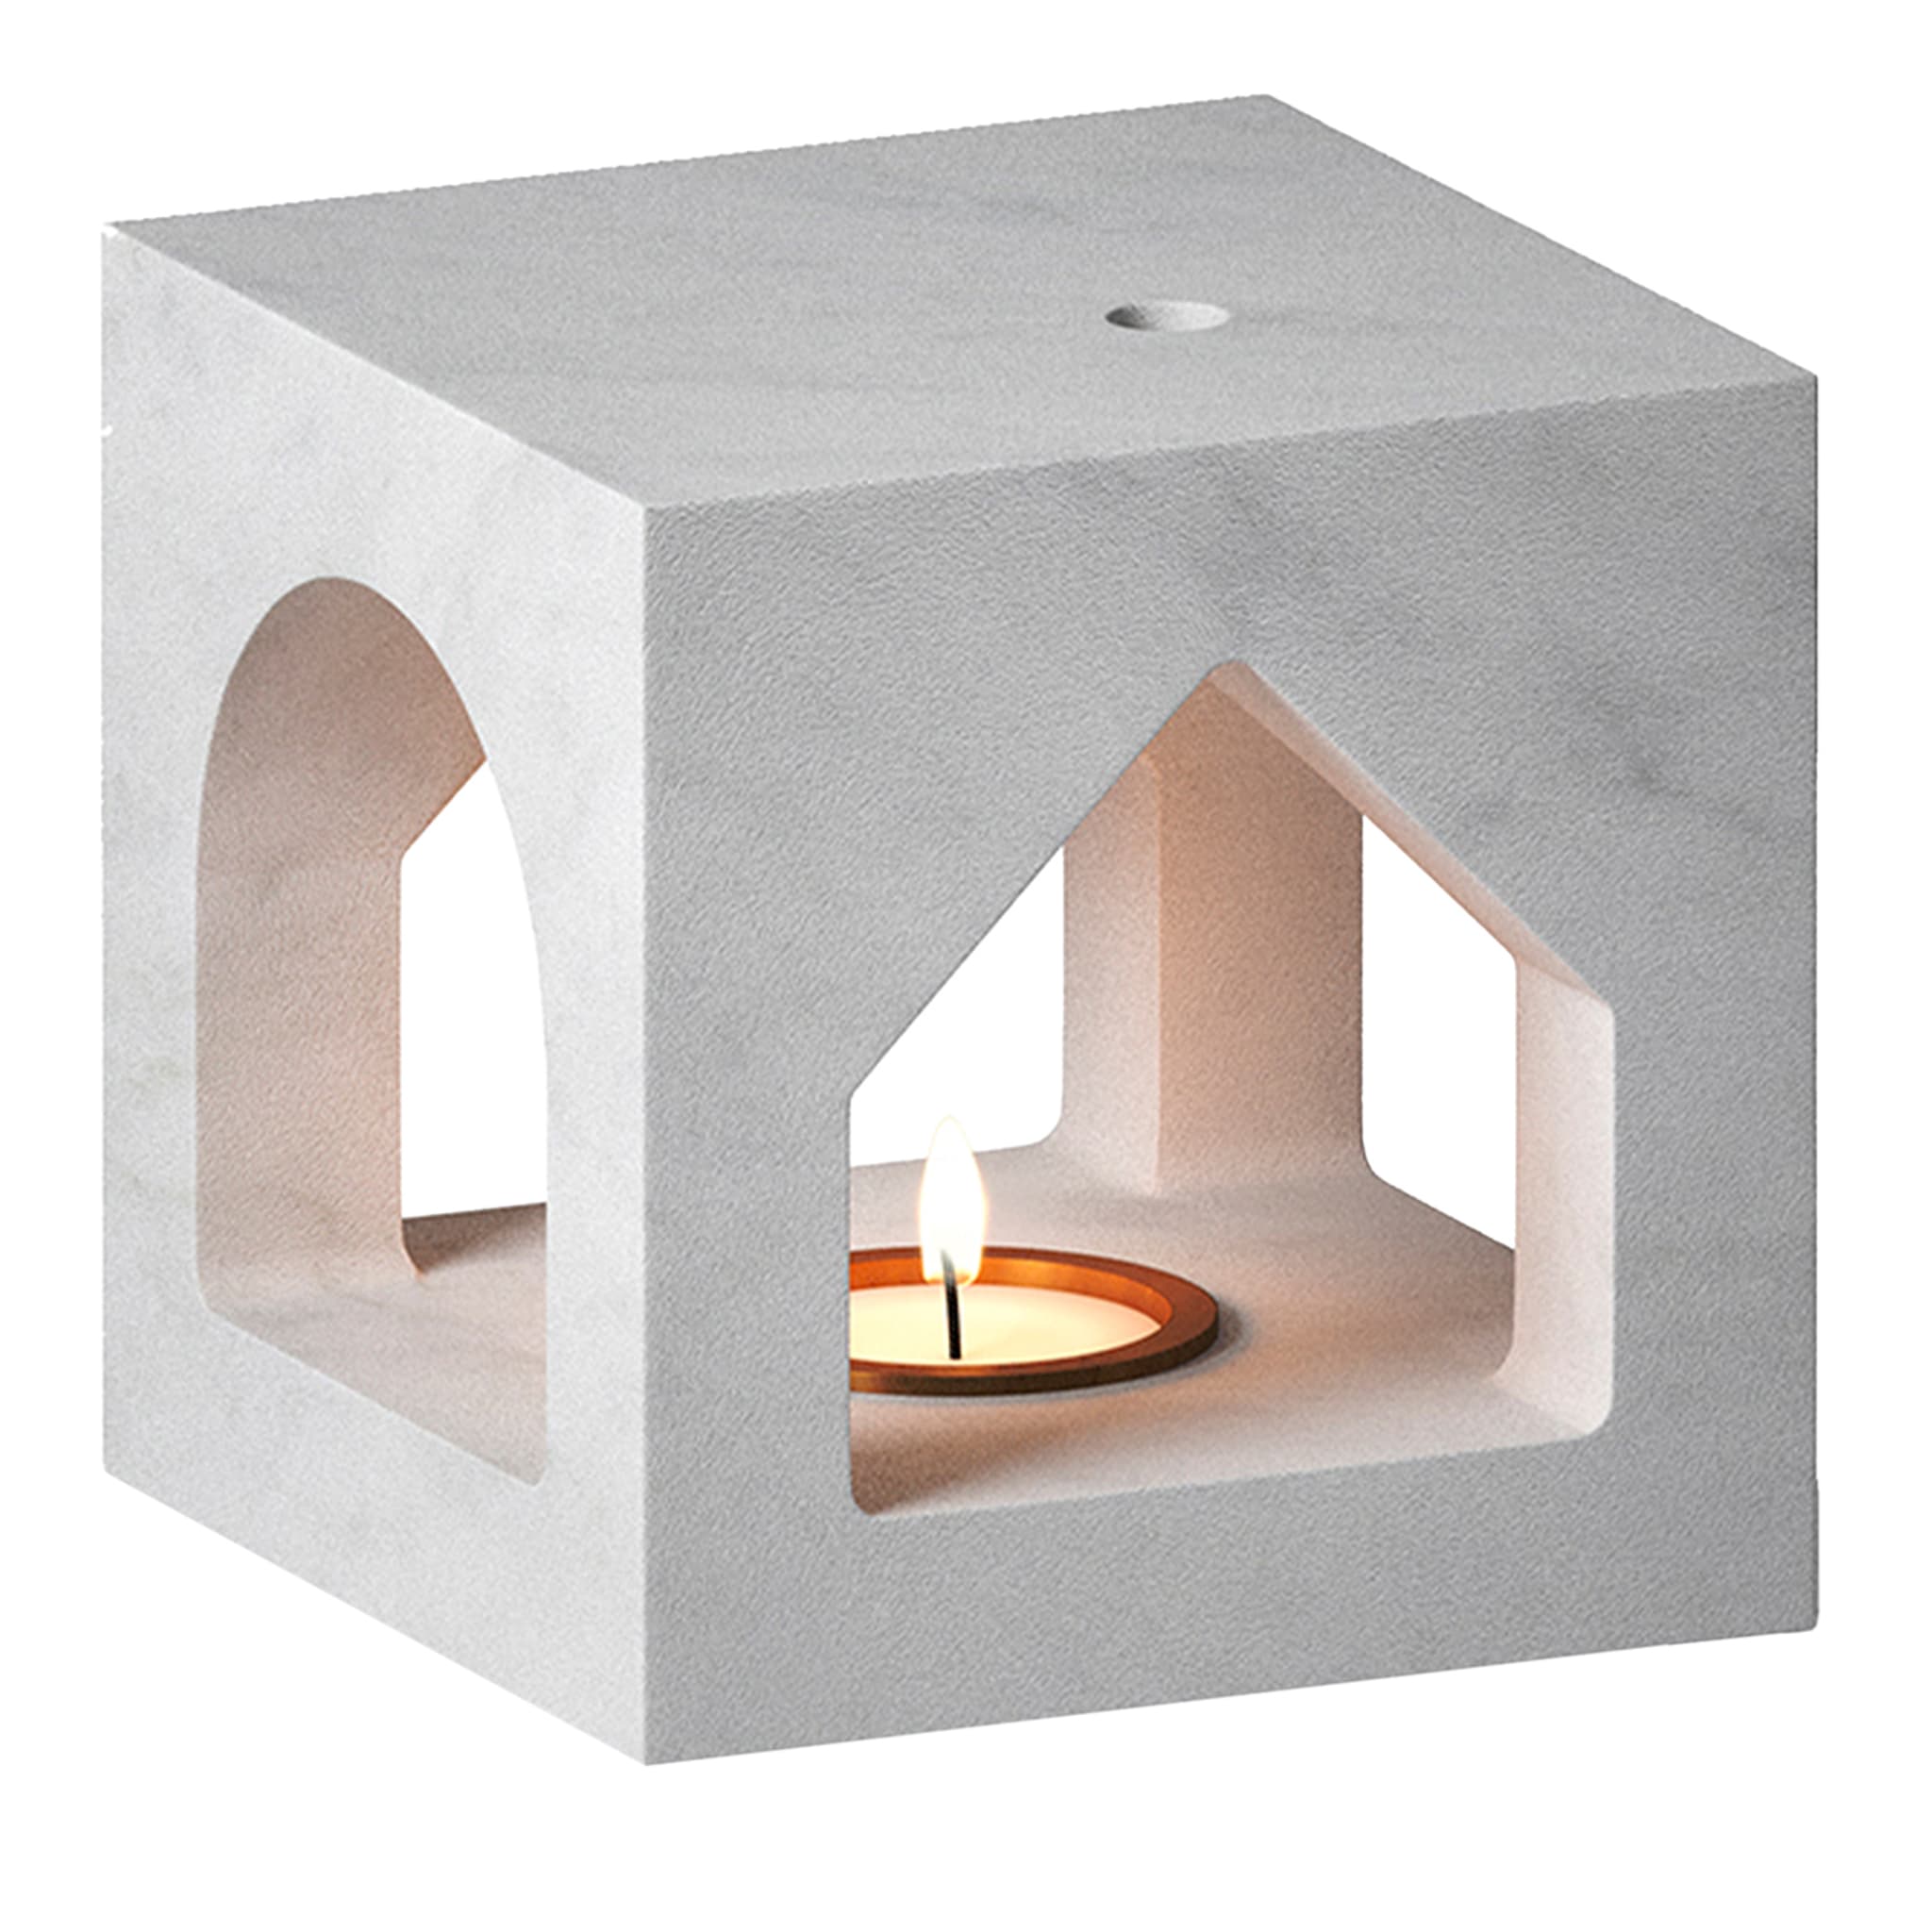 The Village - MA House Carrara Candleholder by Kengo Kuma